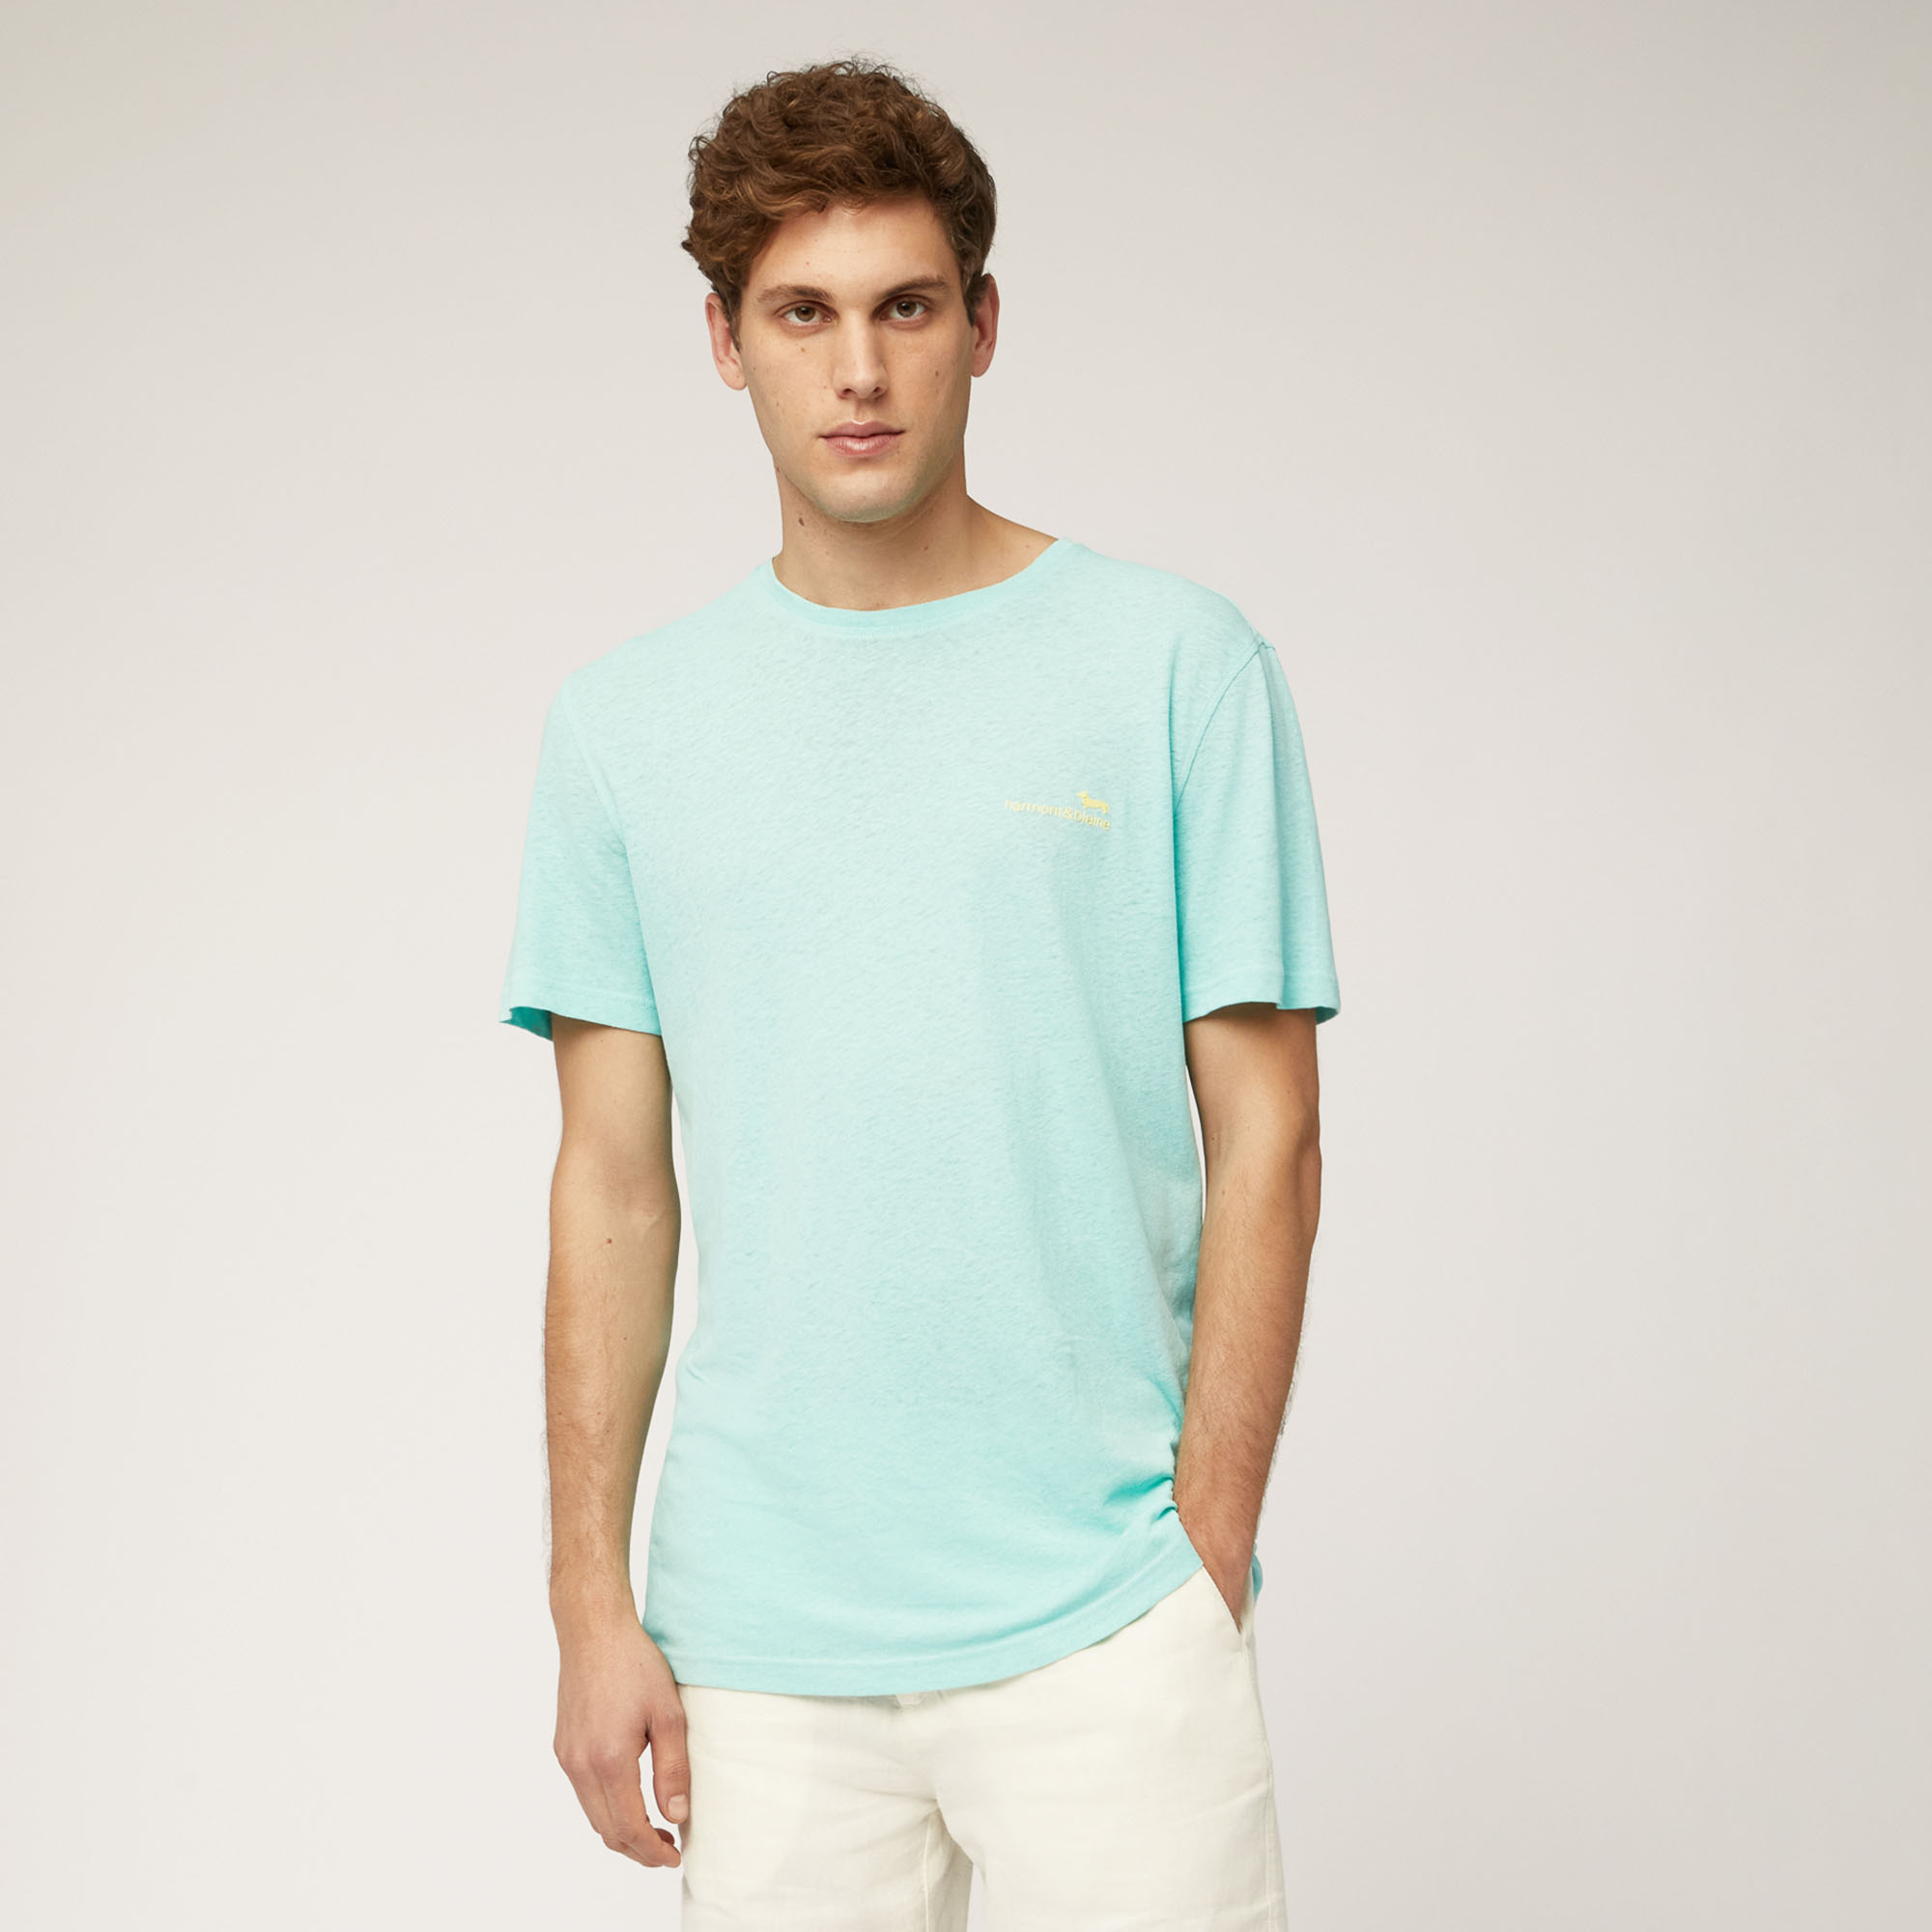 Linen and Cotton T-Shirt, Light Blue, large